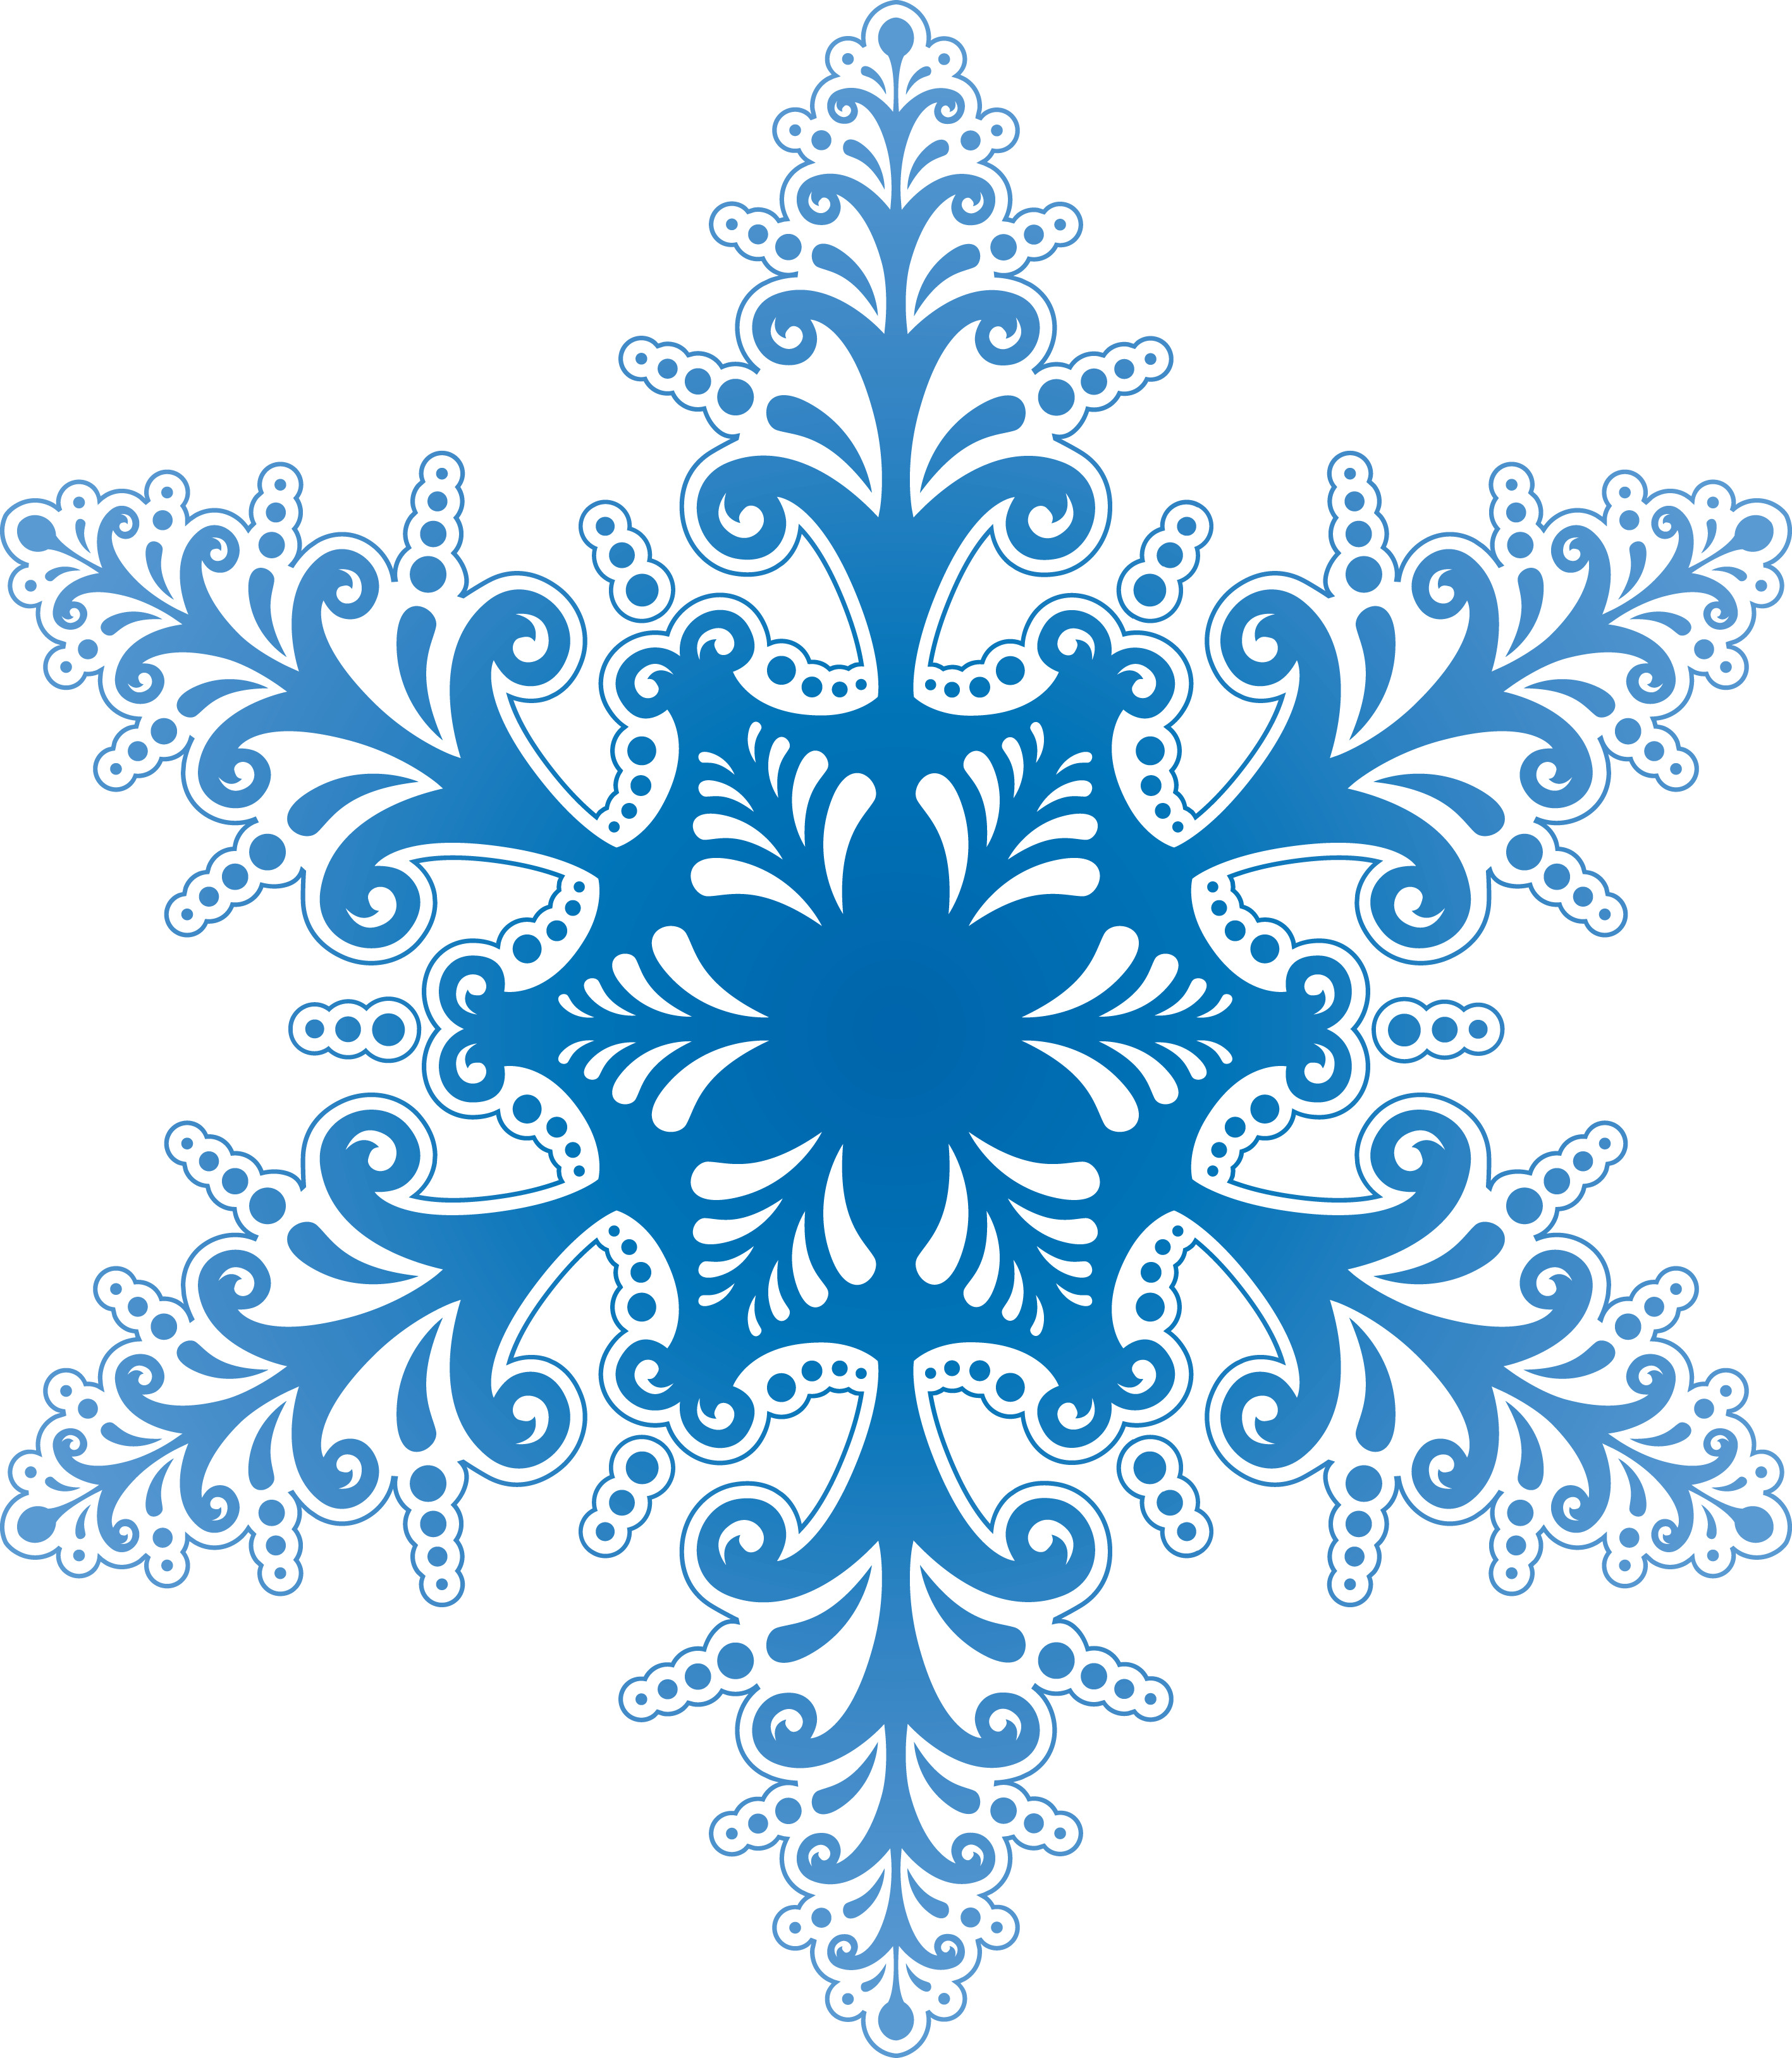 Snowflake Ornate icons